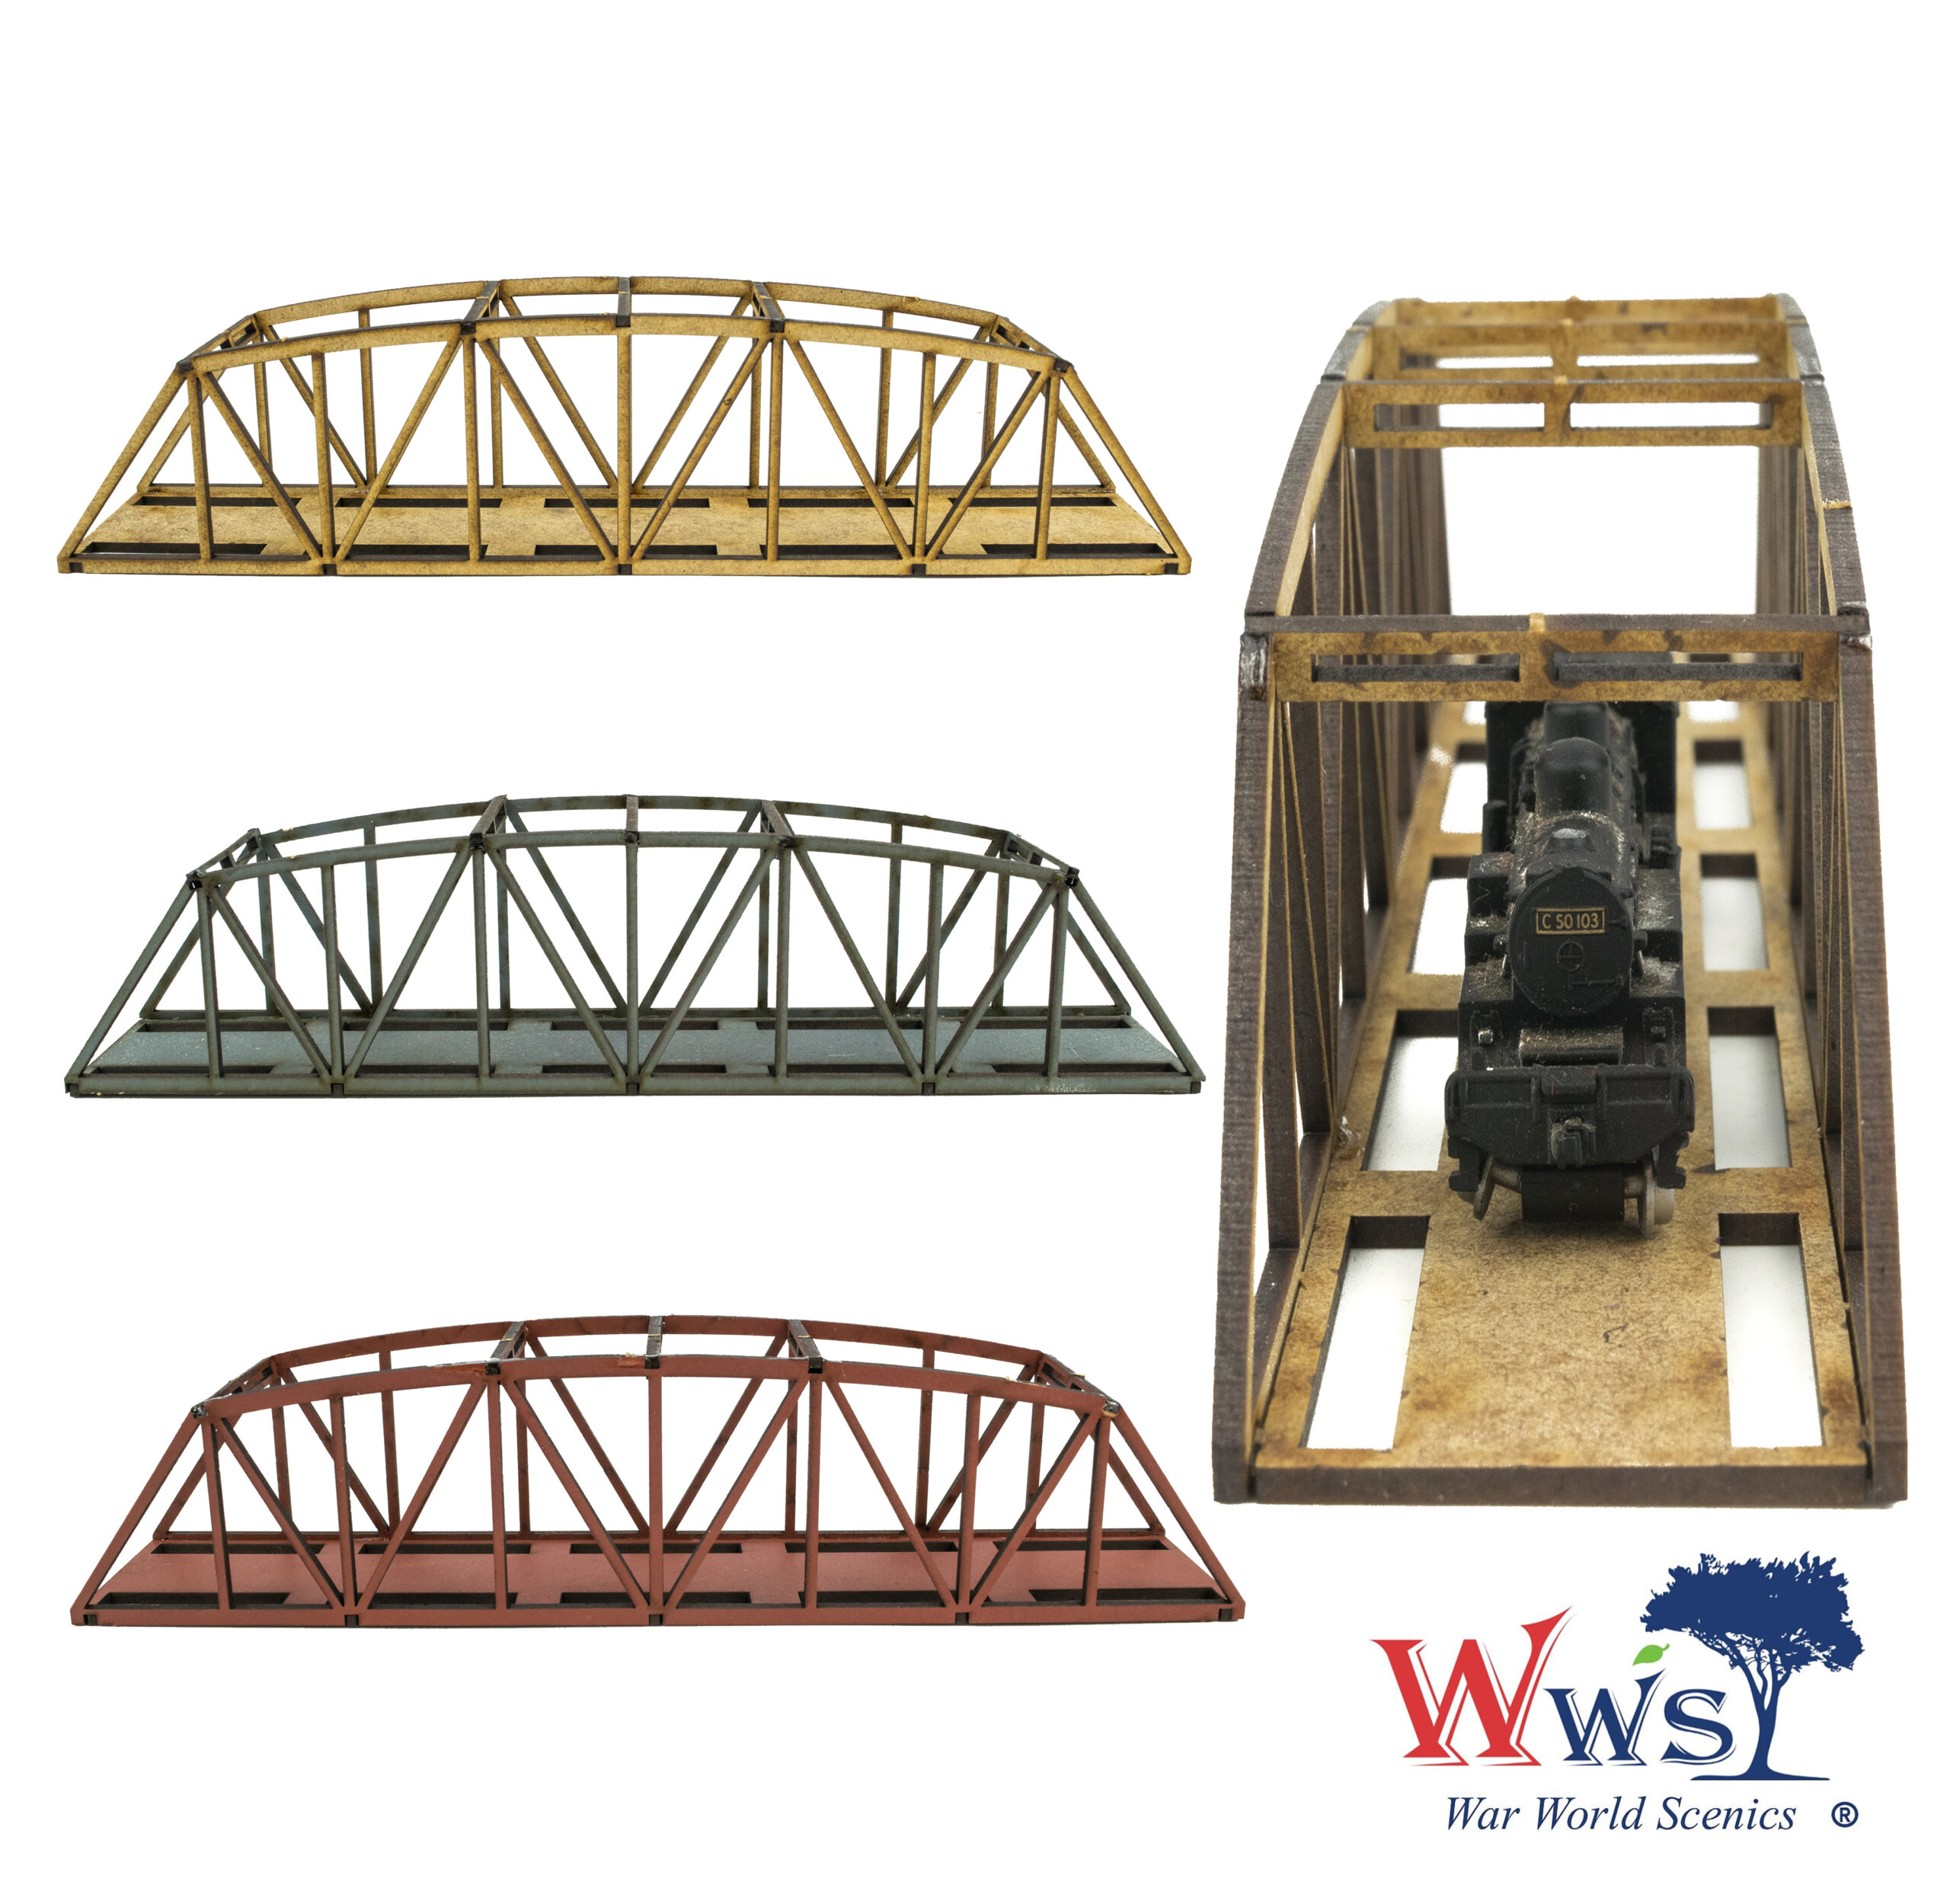 WW Scenics Single Track Camelback Girder Red Bridge S003